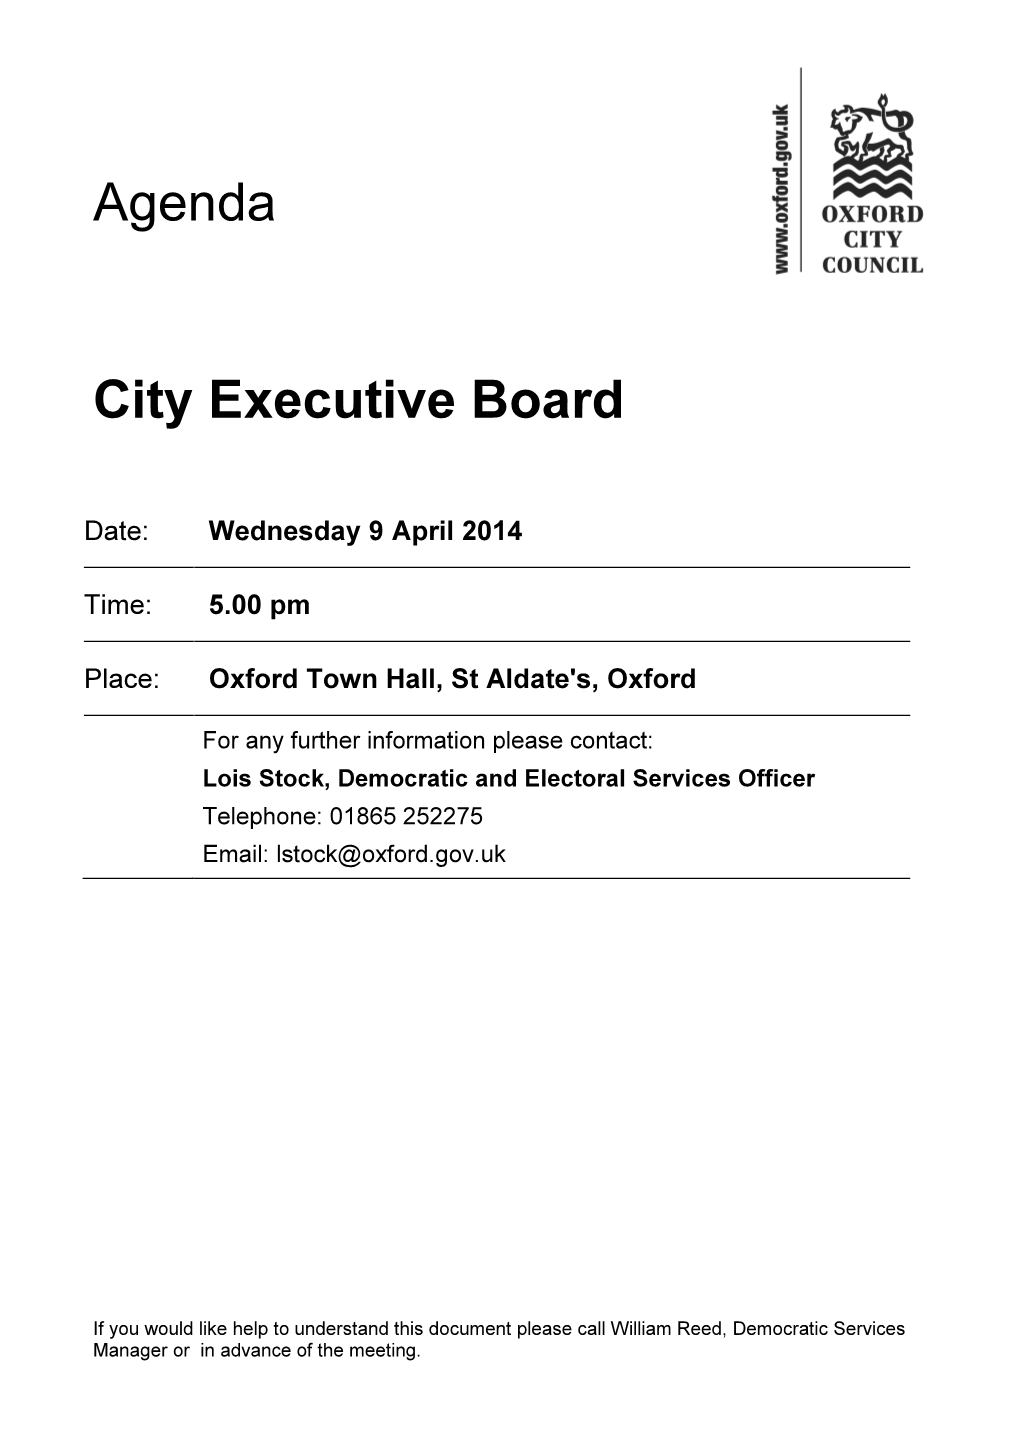 Agenda City Executive Board